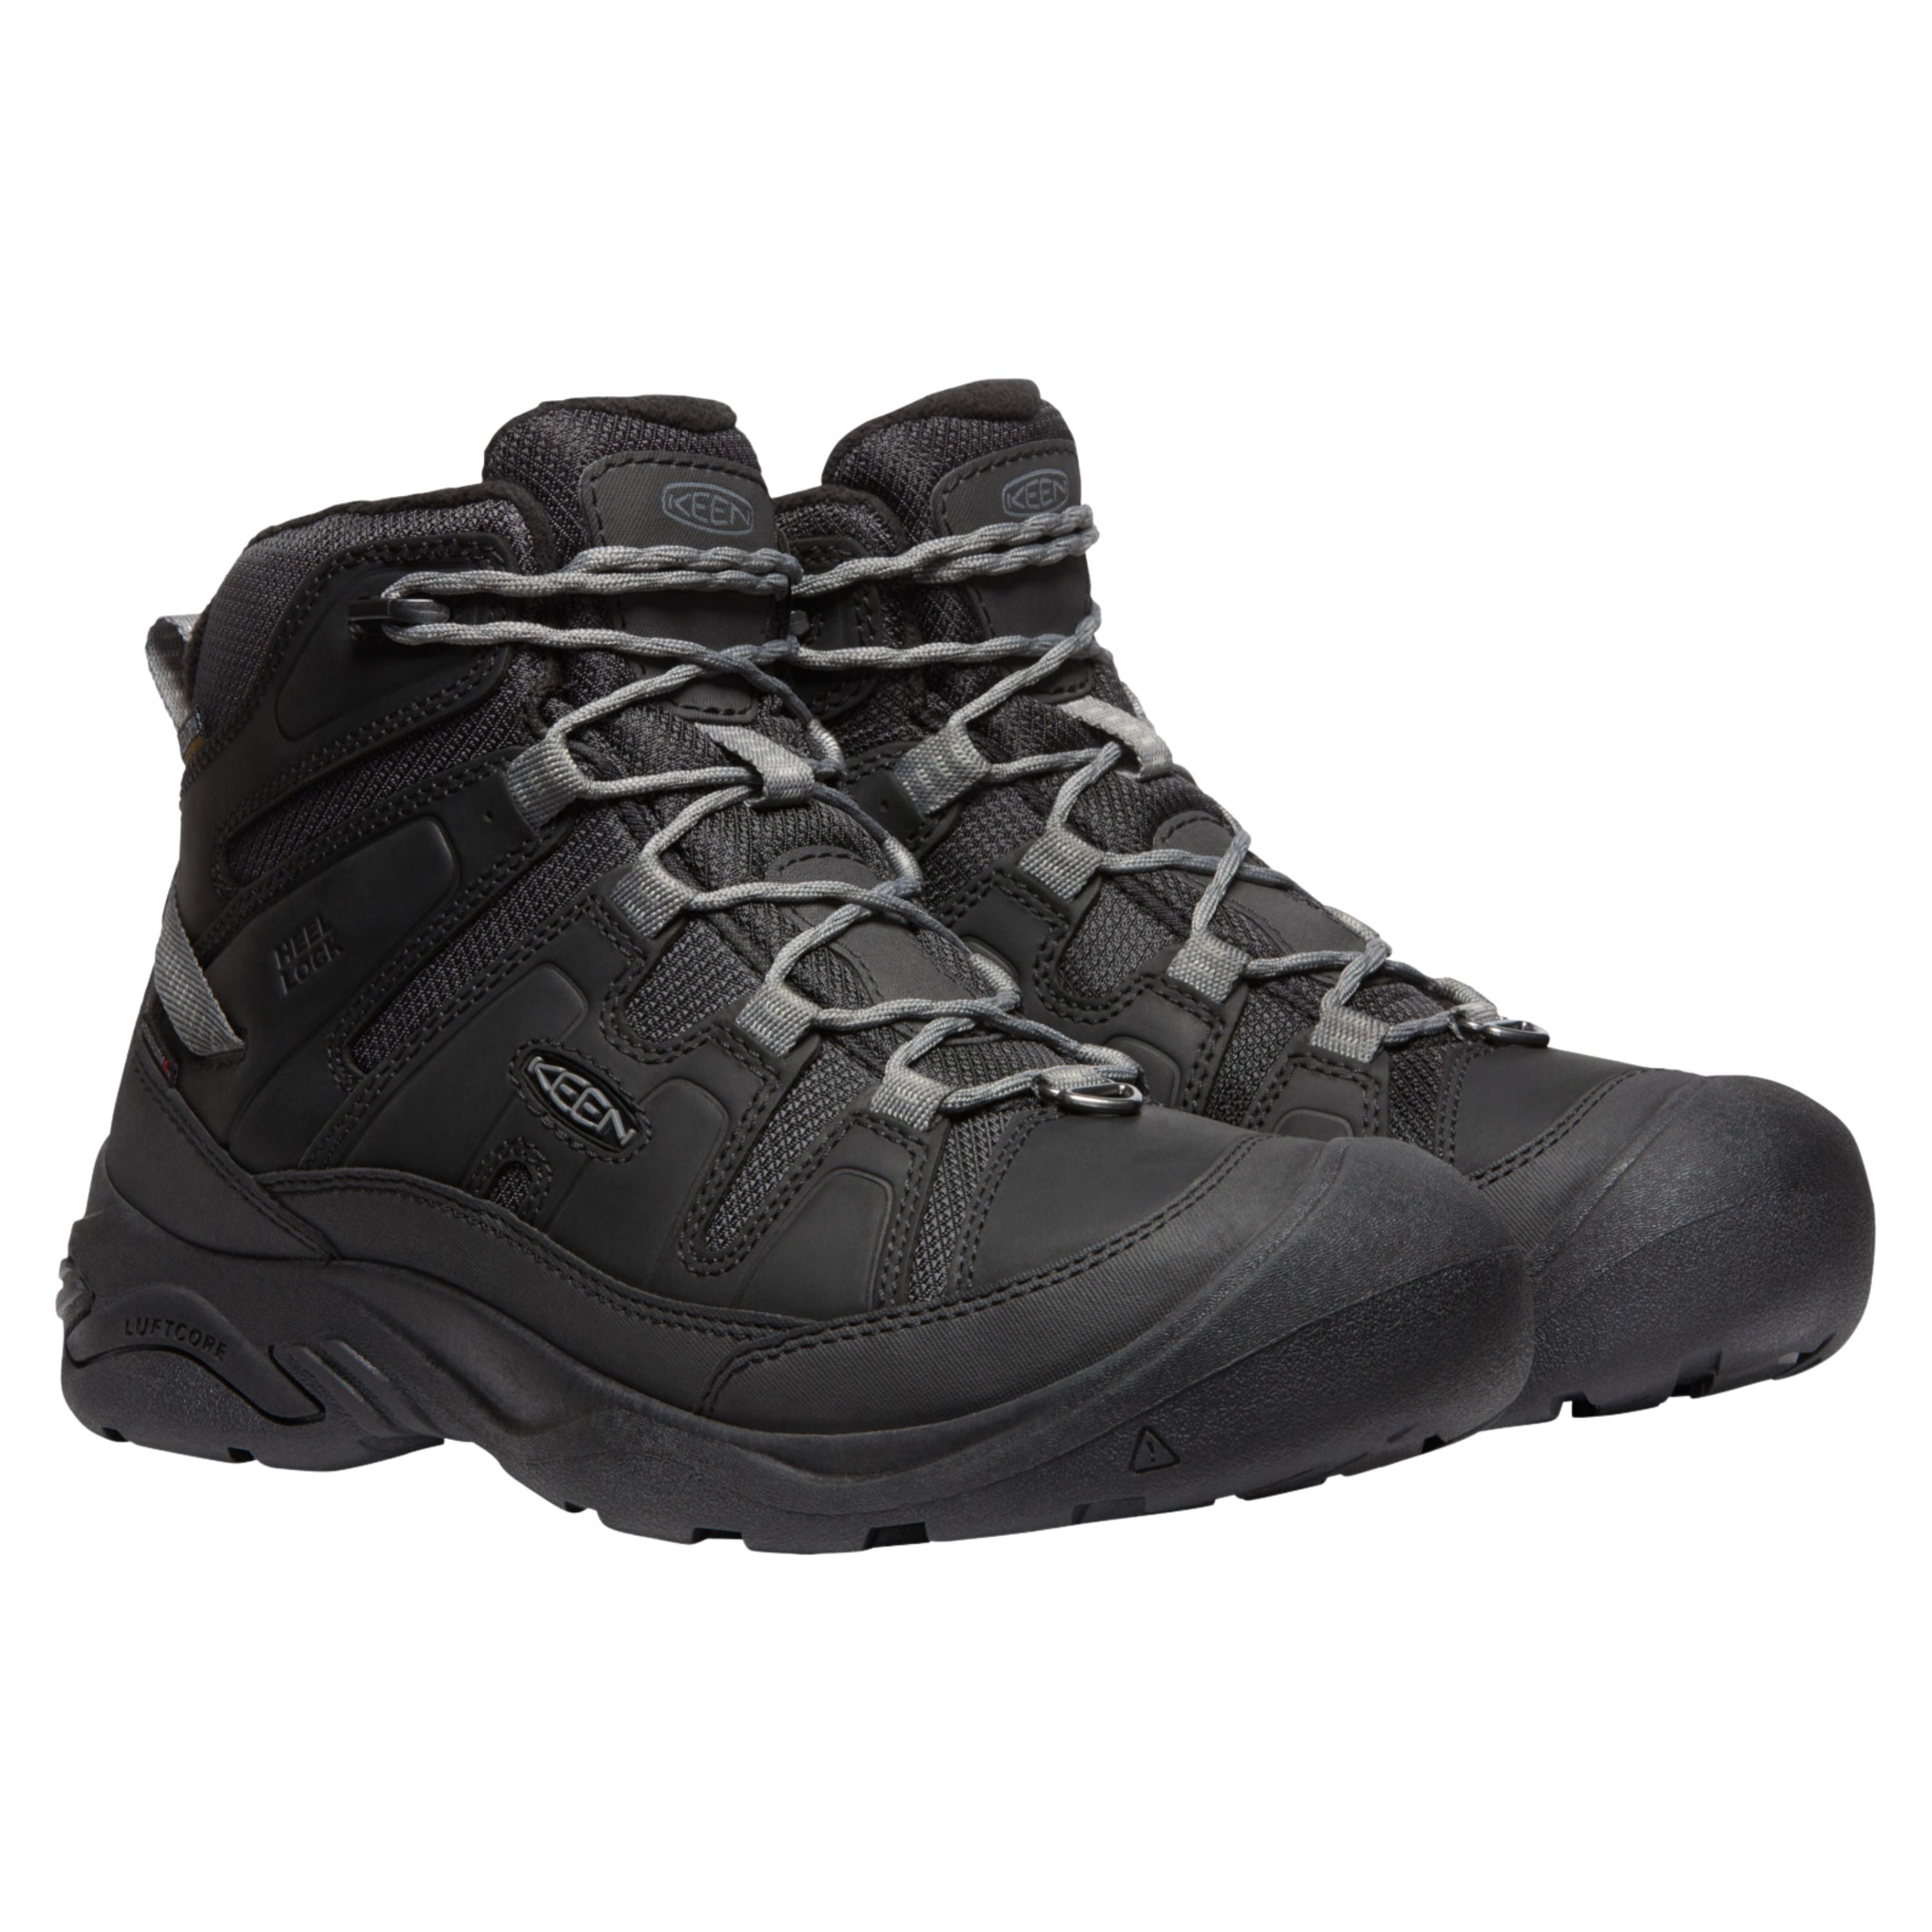 "Circadia MID Polar" Insulated hiking boots - Men's